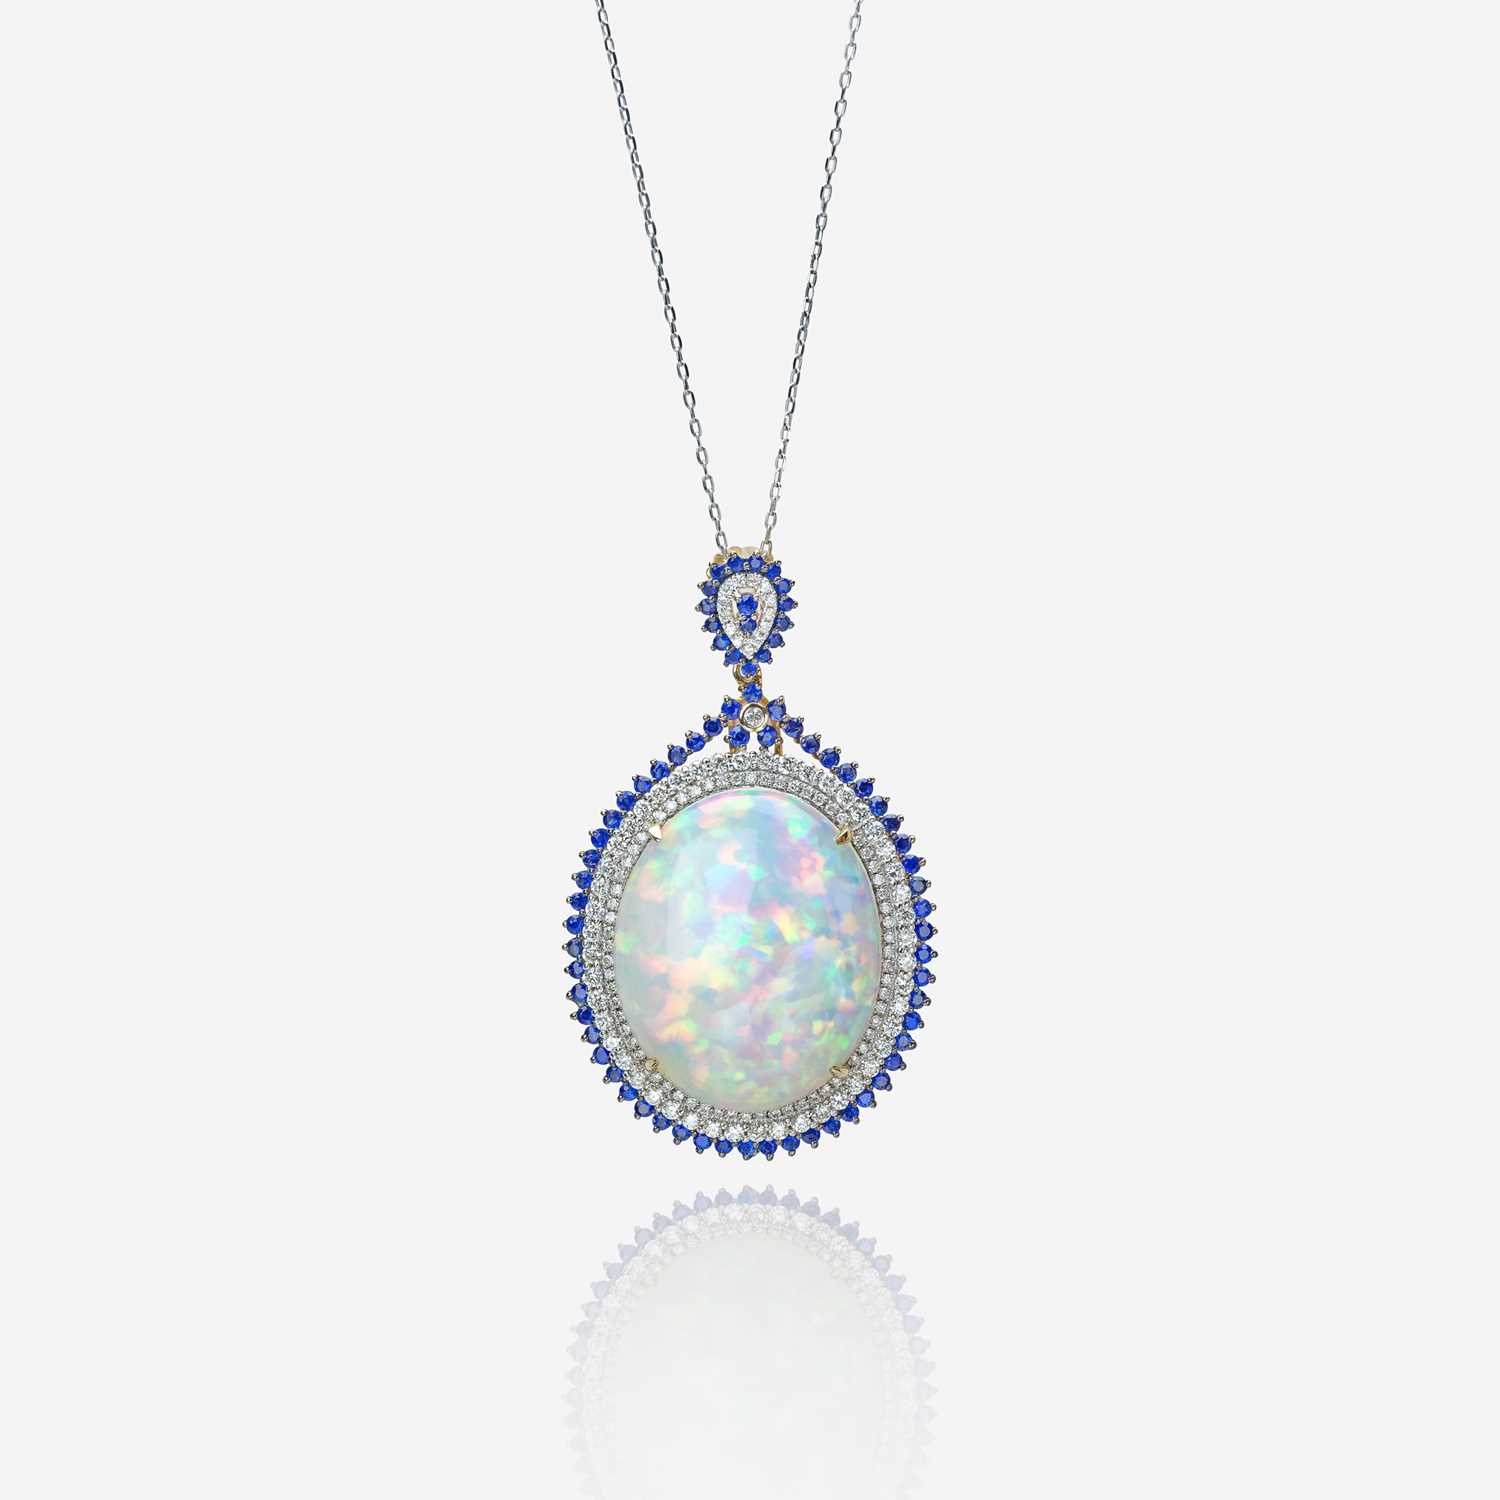 Lot 110 - An opal, diamond, sapphire, and fourteen karat gold pendant with chain